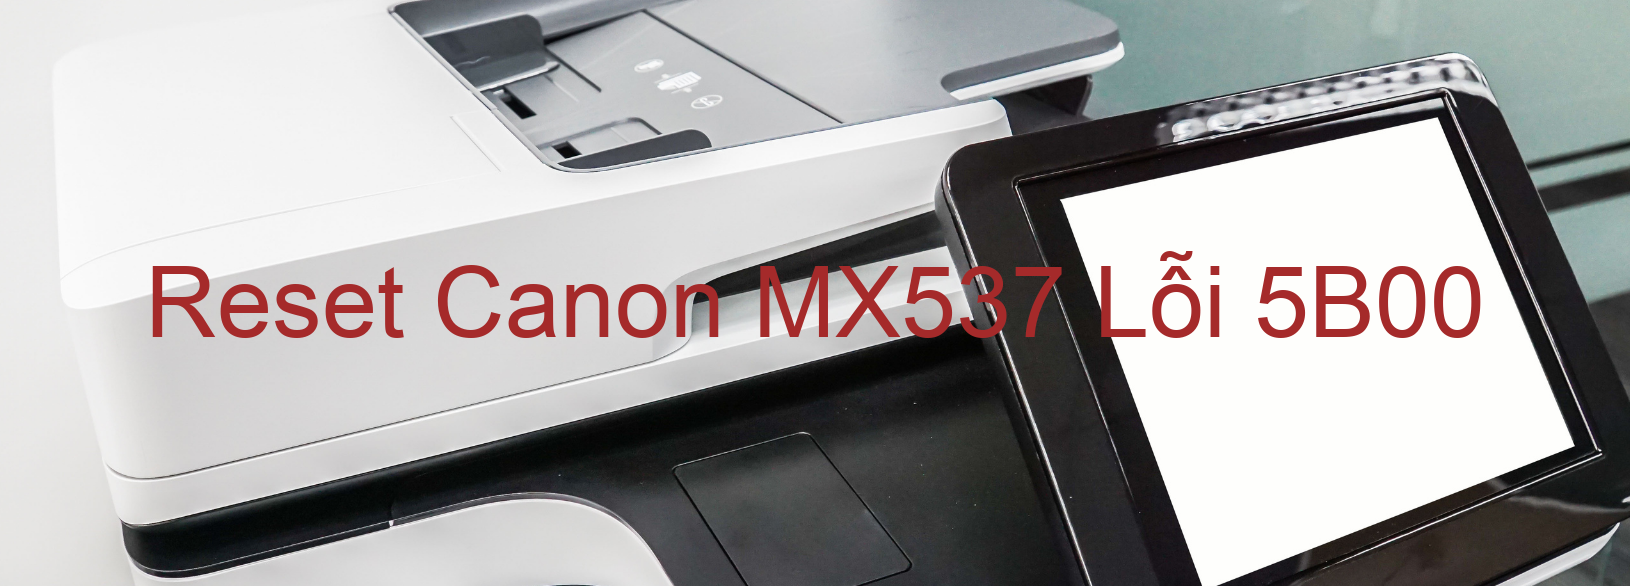 Reset Canon MX537 Lỗi 5B00